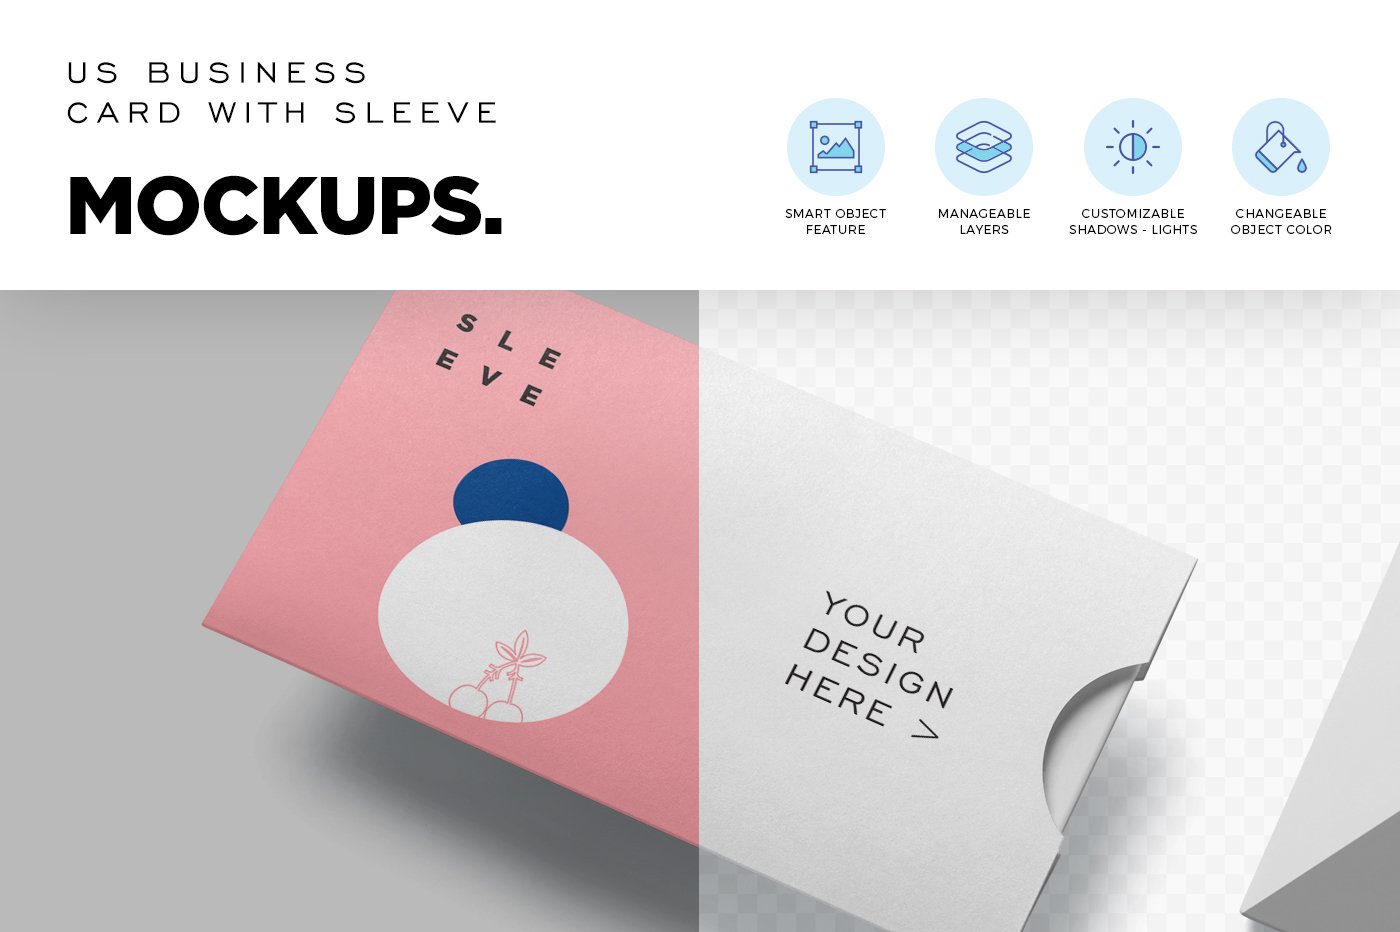 071 带卡套名片卡片PSD样机 US Business Card with Sleeve Mockups